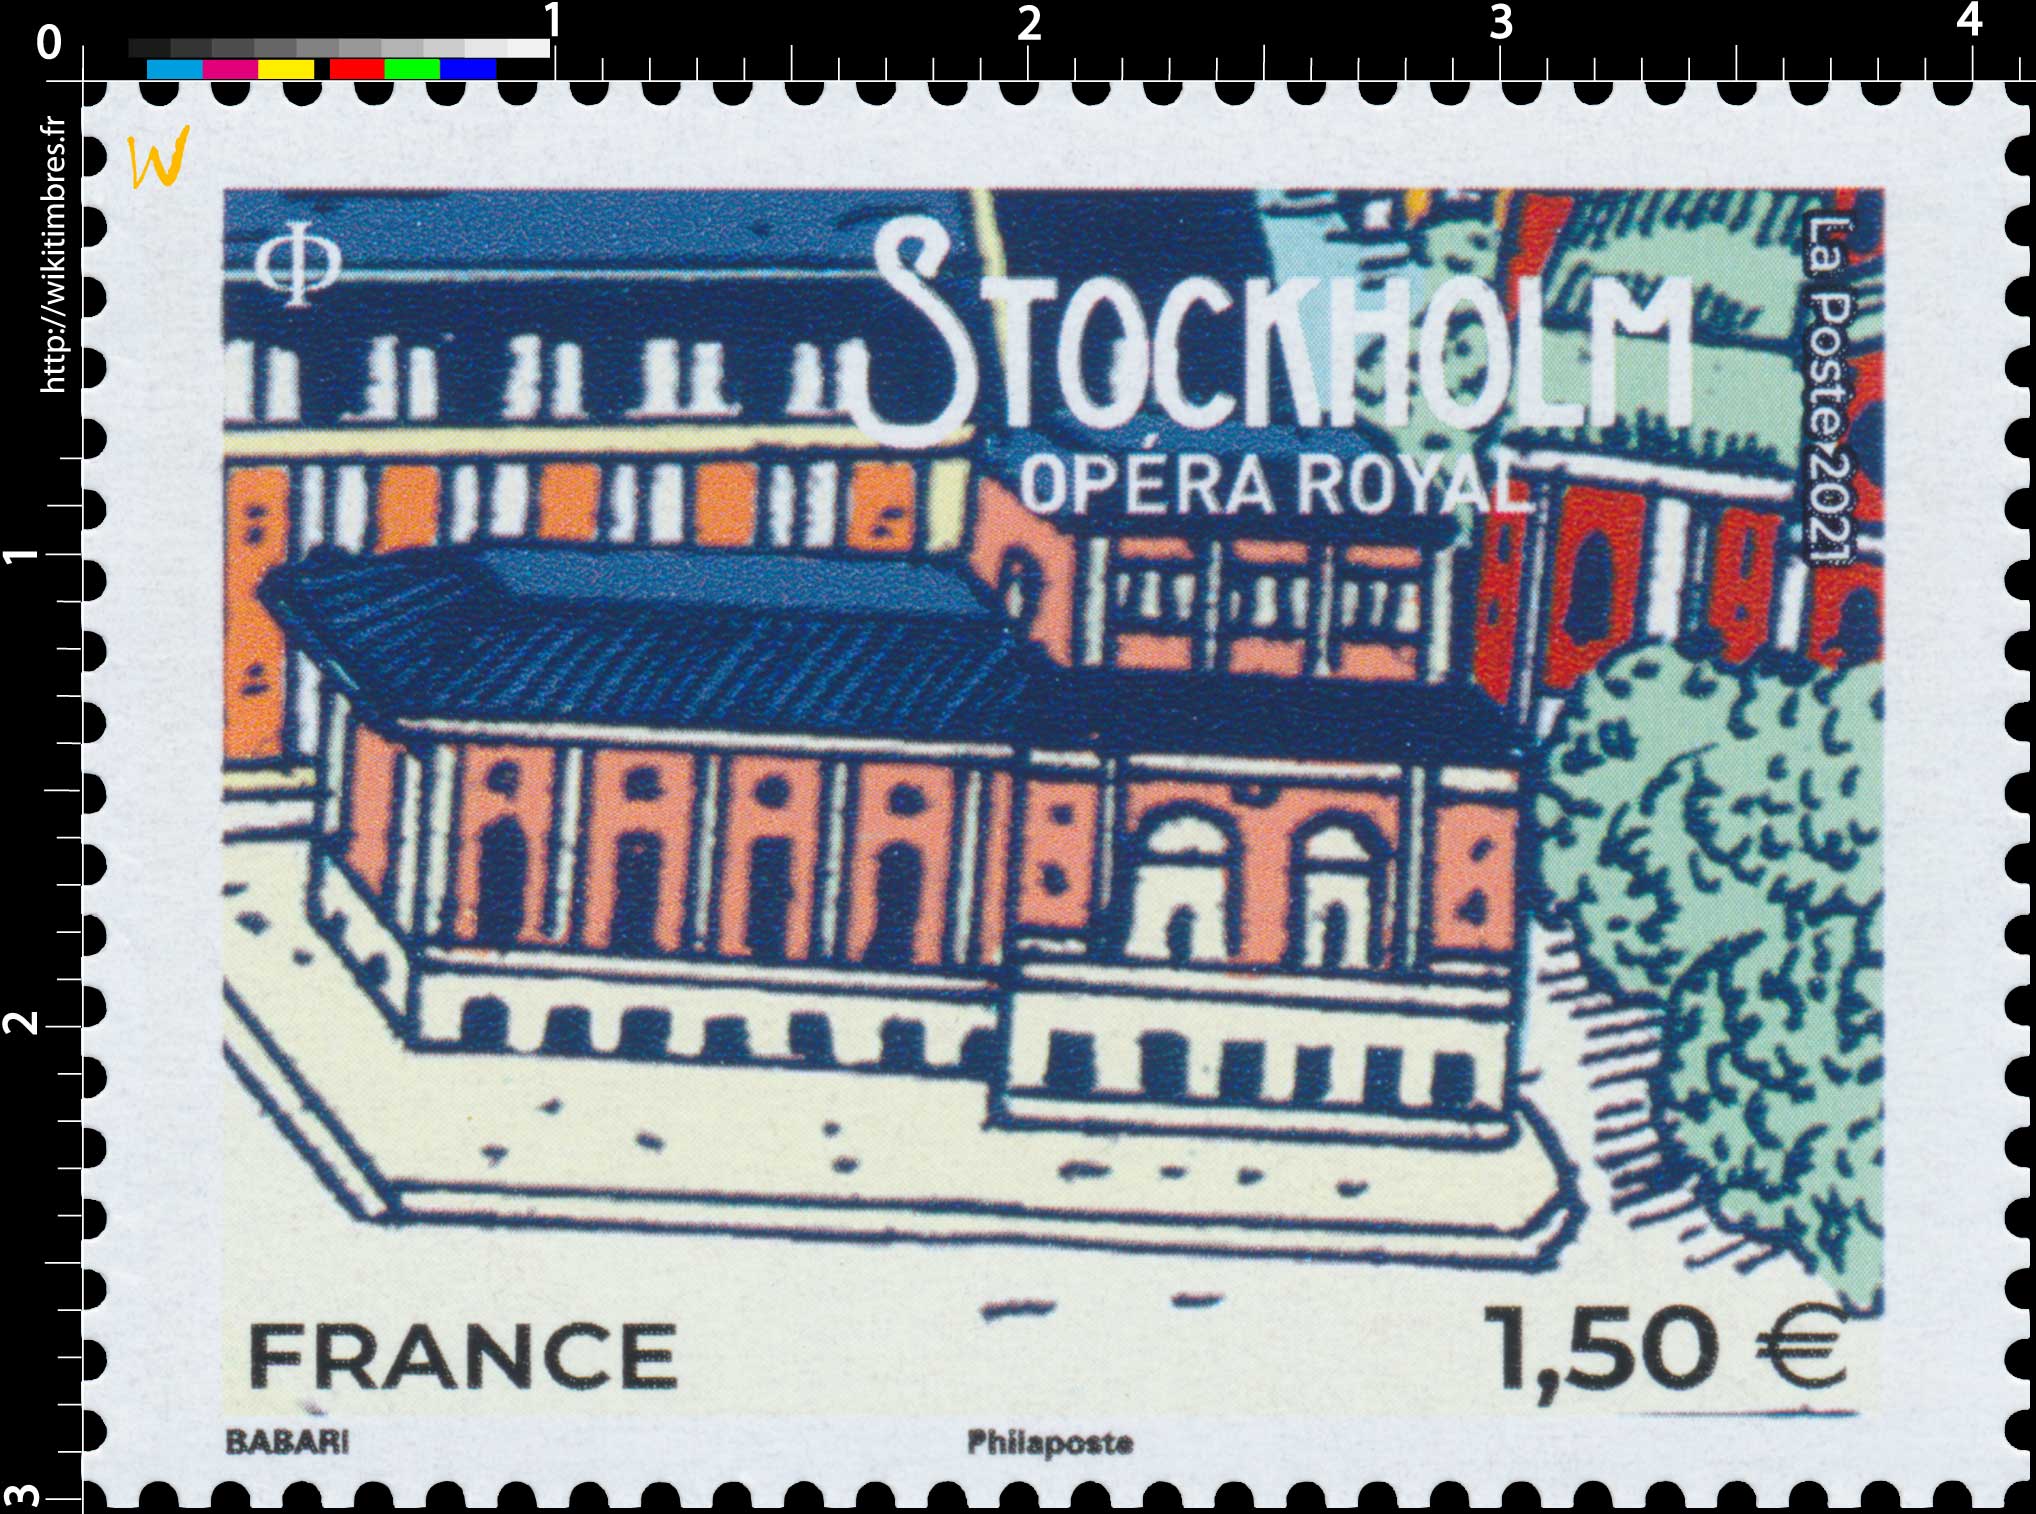 2021 STOCKHOLM - Opéra royal